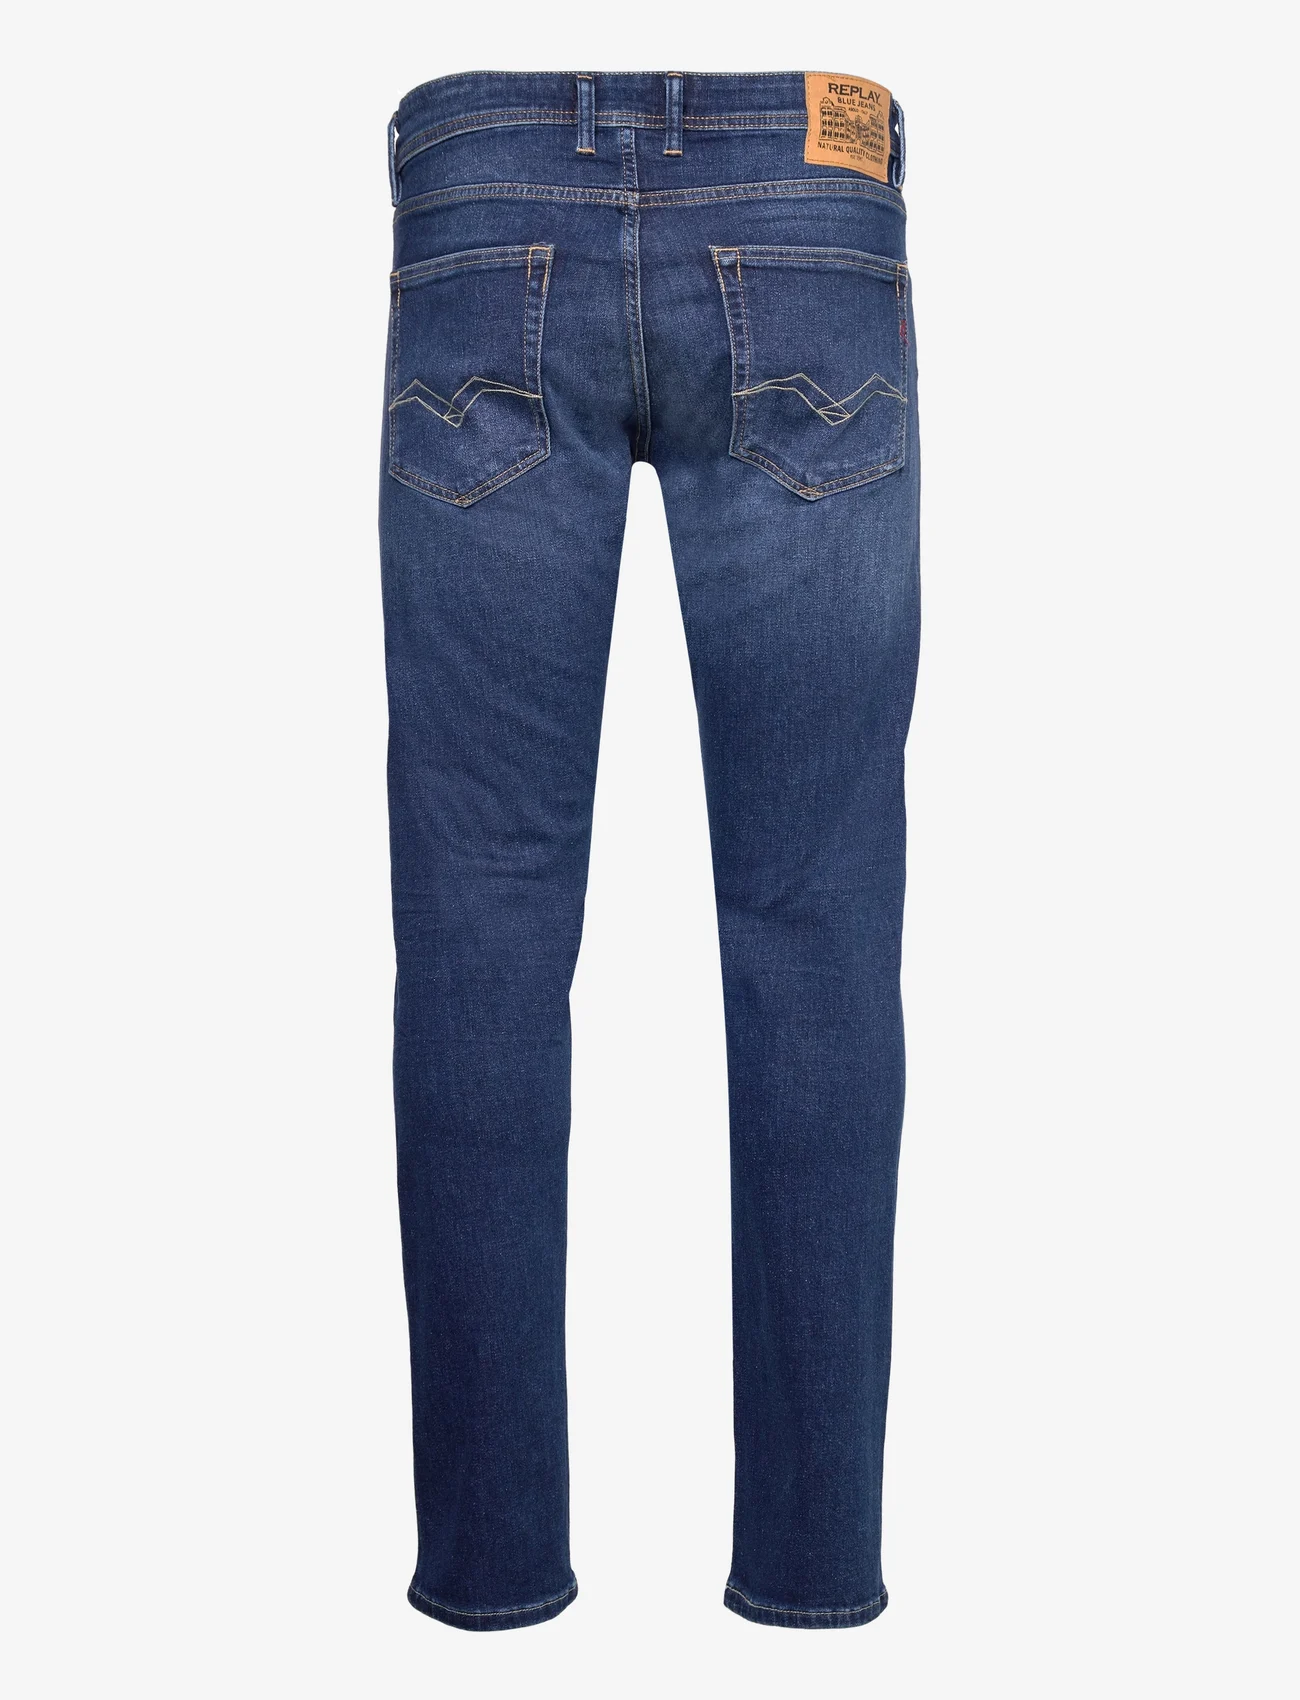 Replay - GROVER Trousers STRAIGHT 99 Denim - kitsad teksad - blue - 1